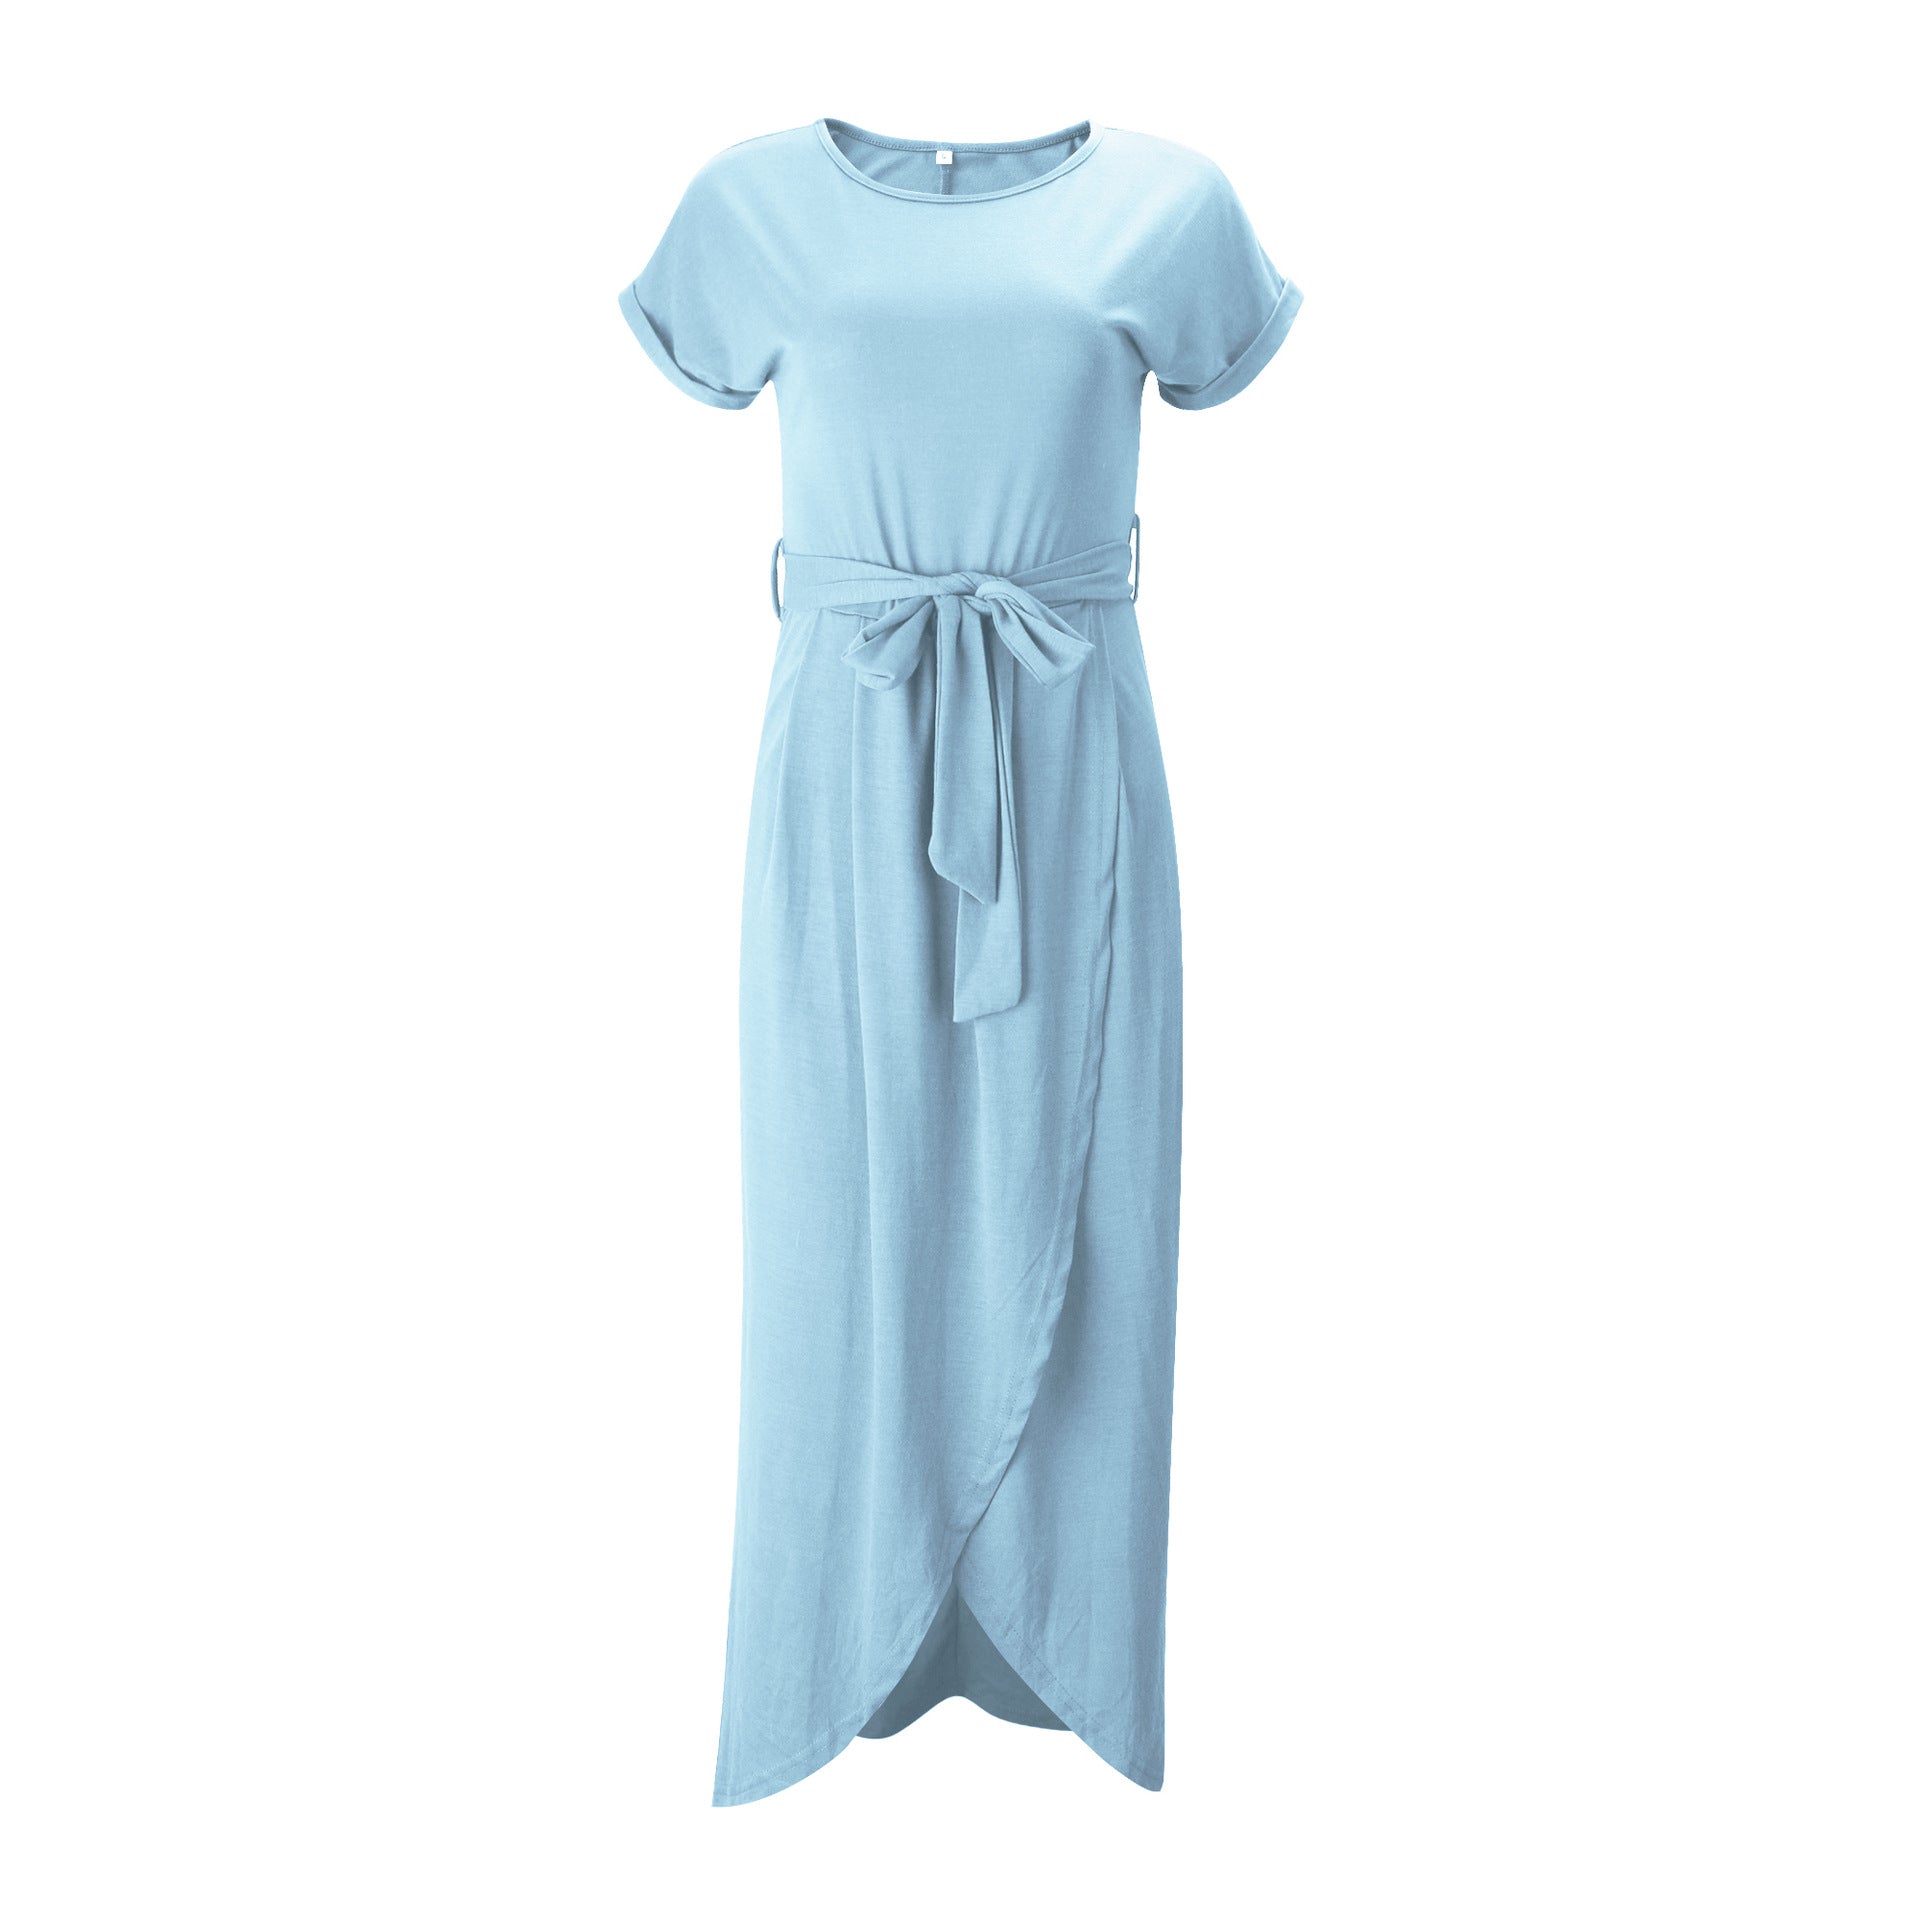 Summer Knitting Solid Color Short Sleeve Round Neck Irregular Dress